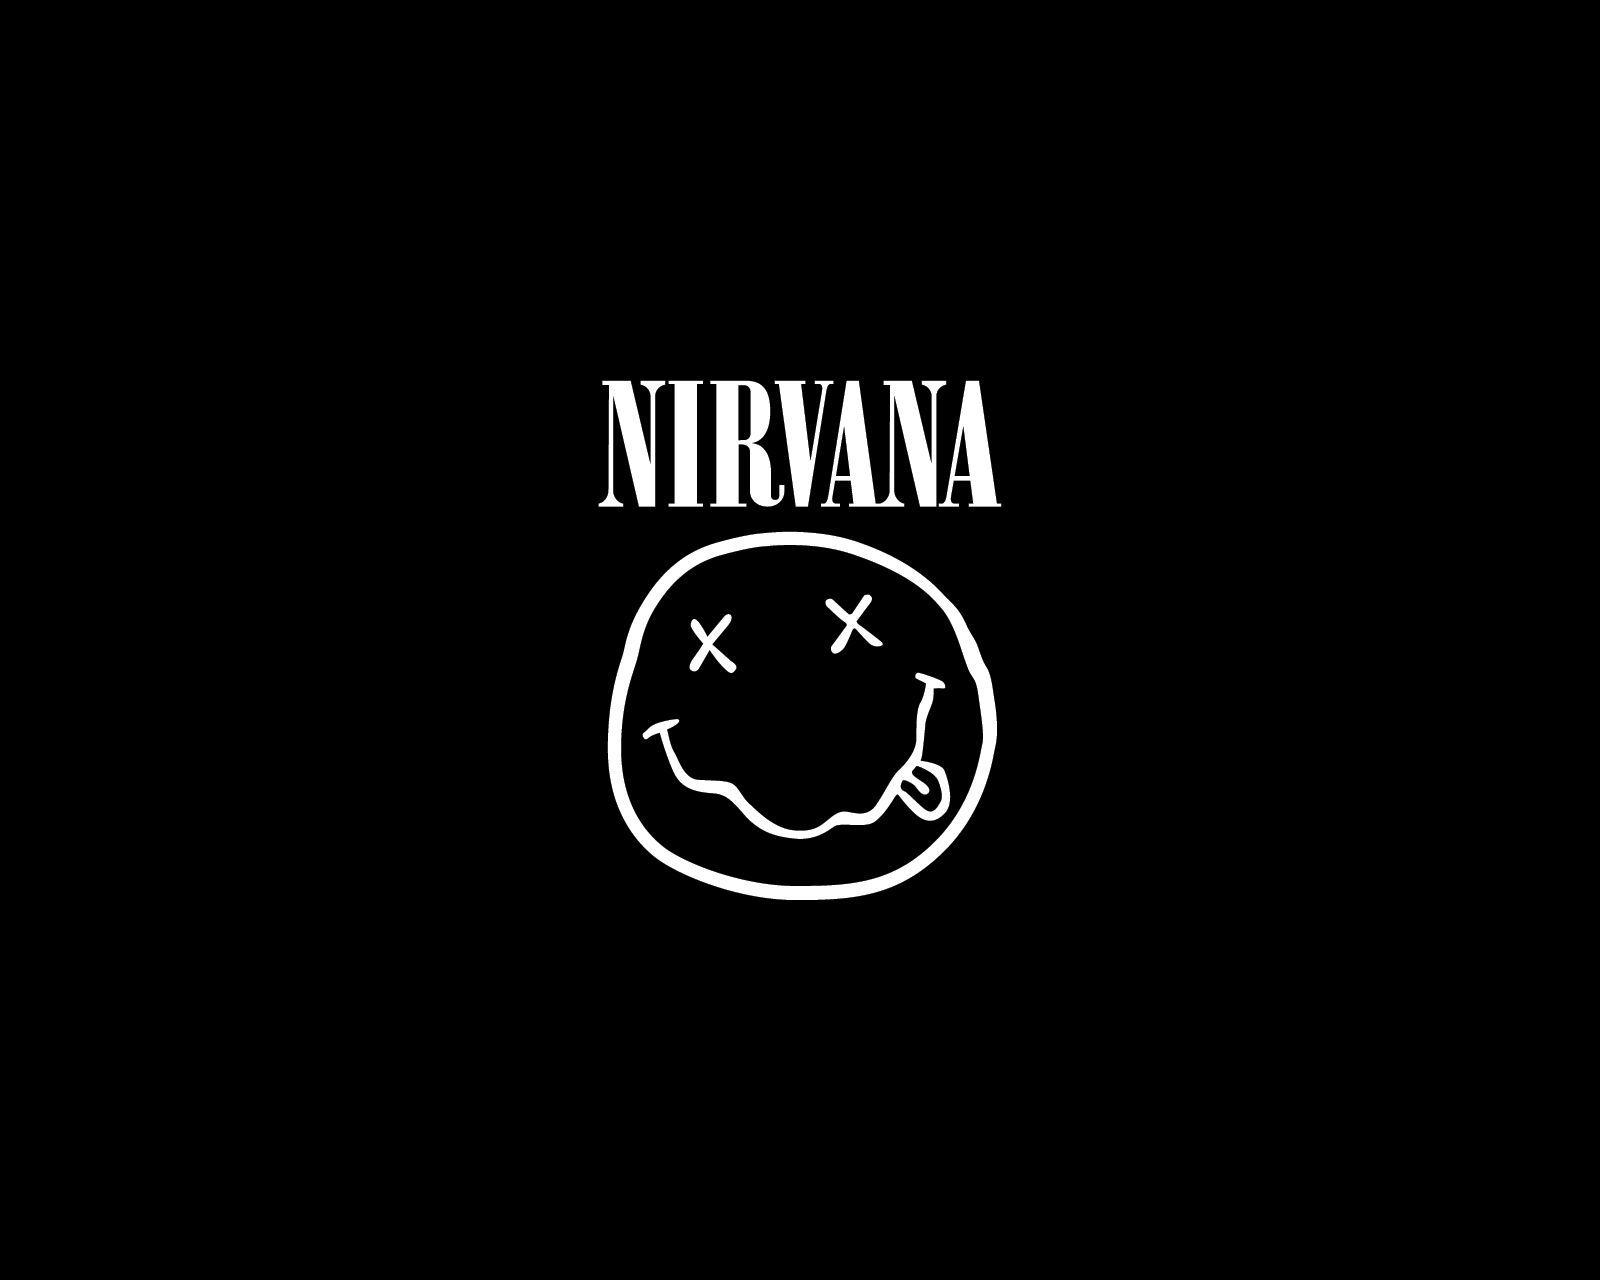 Nirvana Rock Band Logo - Nirvana logo | Film Logos | Pinterest | Nirvana, Music and Band logos